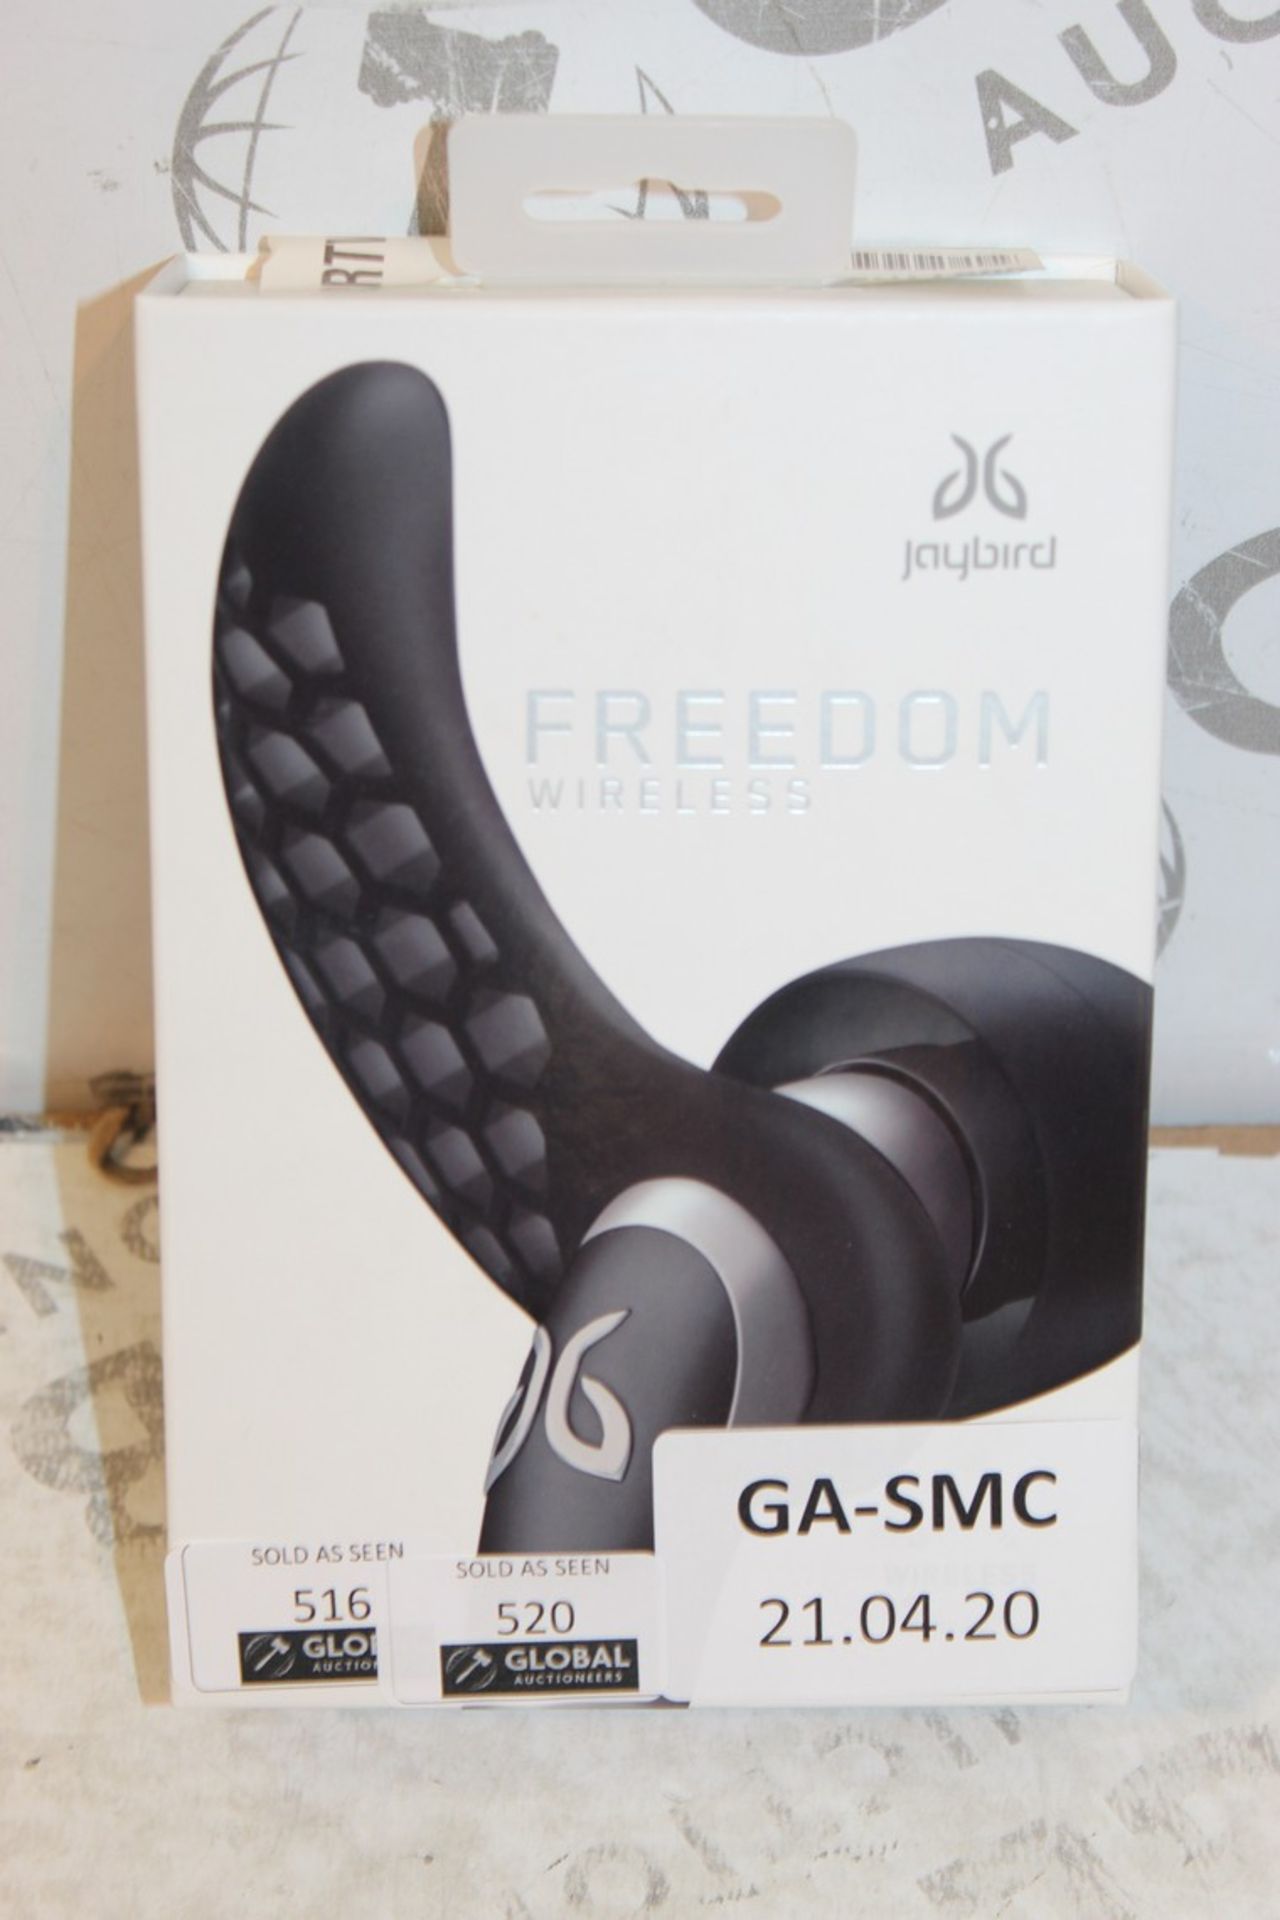 Boxed Pair Of Jaybird Freedom Wireless Headphones RRP £170 (Untested Customer Returns)(Appraisals